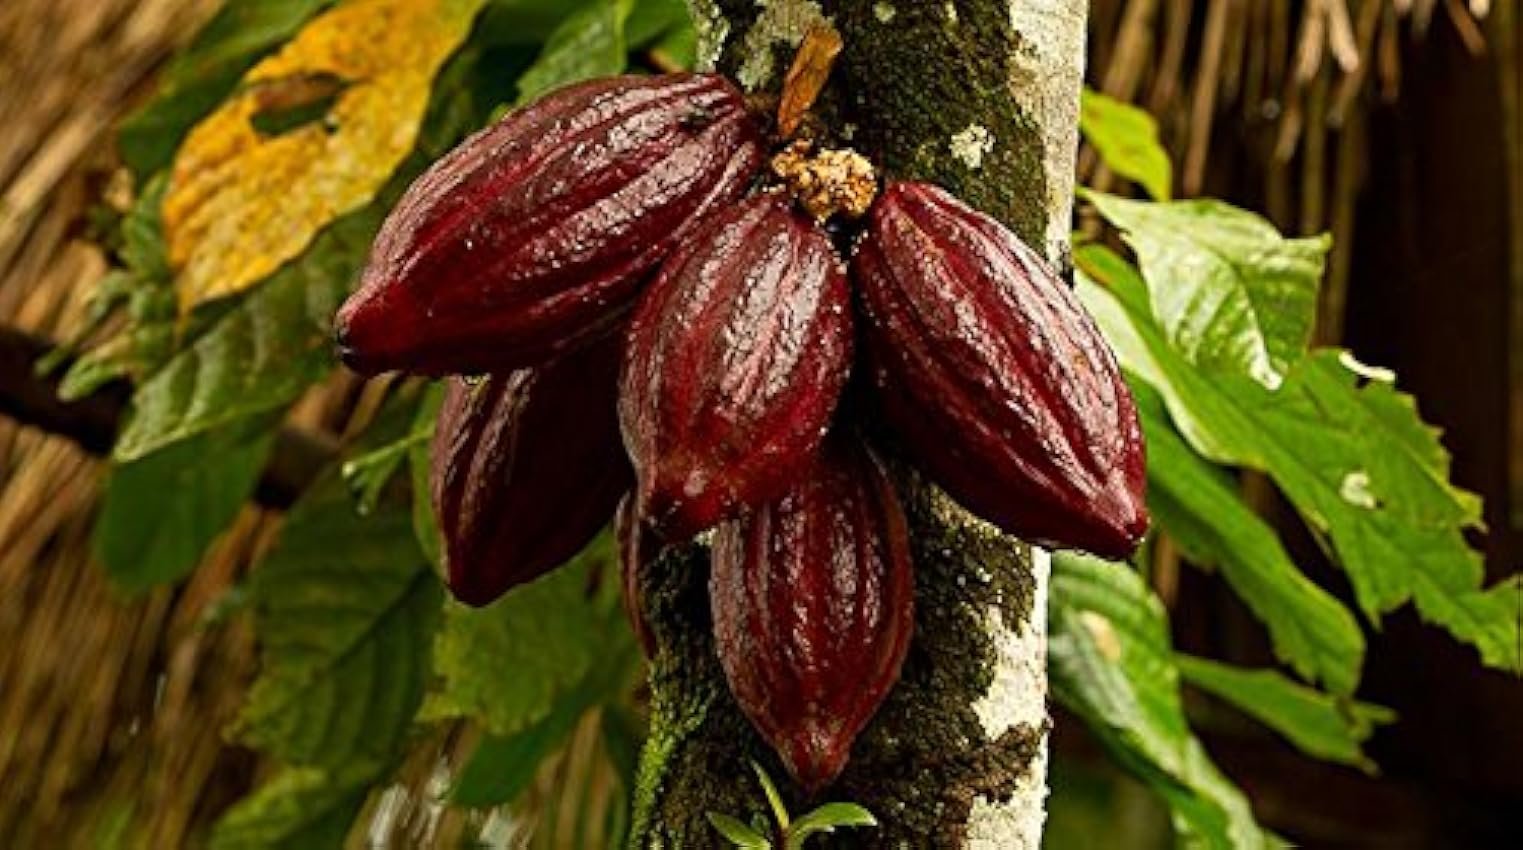 Indigo Herbs Grué De Cacao Cru Sucré au Yacon Bio 500g N9mABOnW